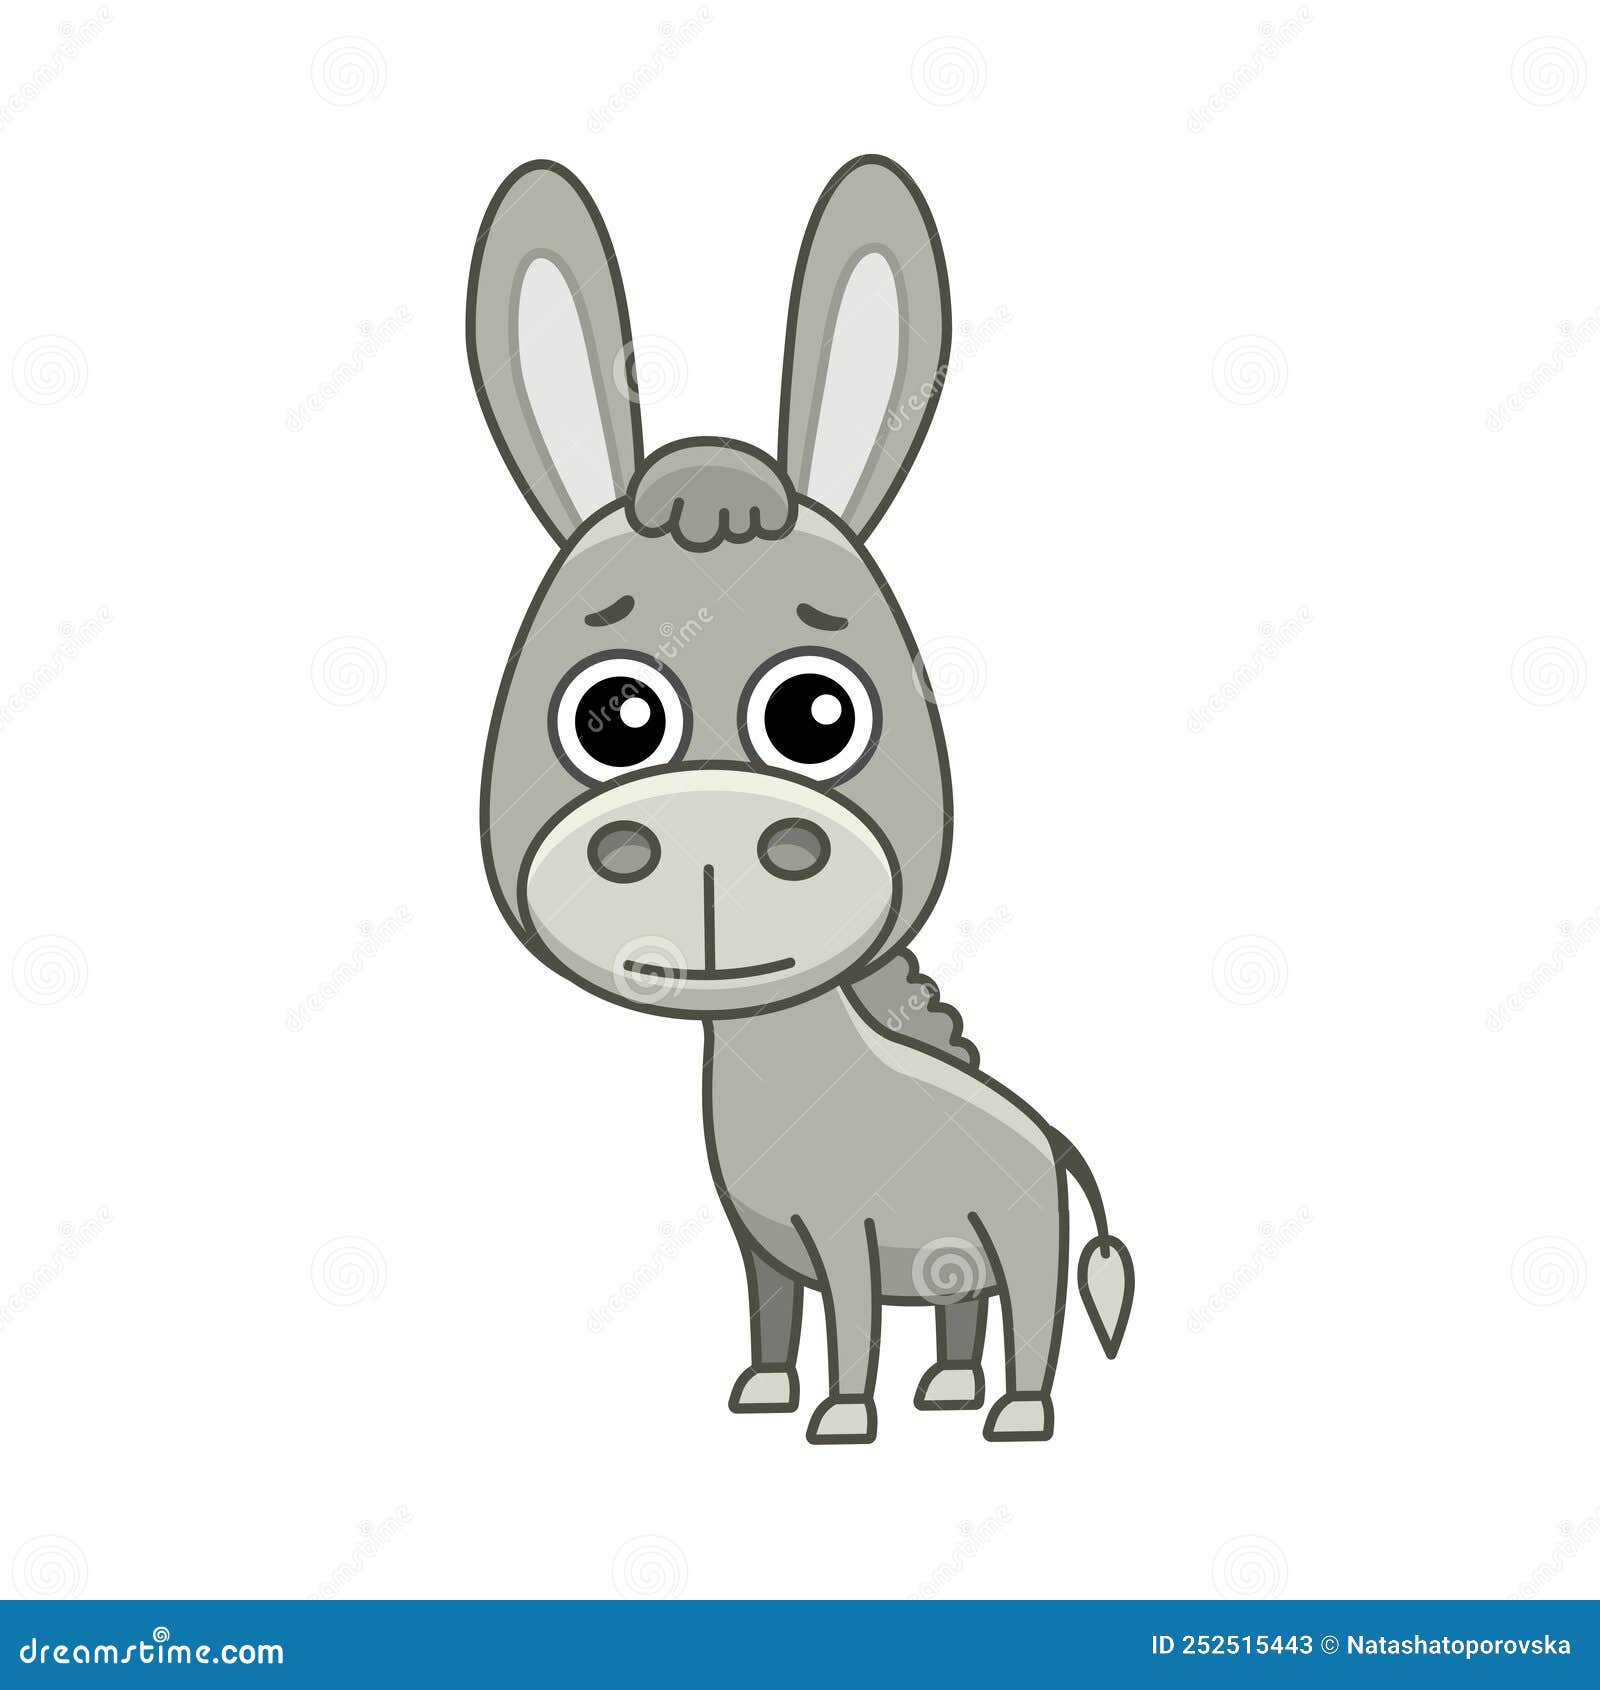 Farm Animal. Funny Little Donkey in a Cartoon Style Stock Vector ...